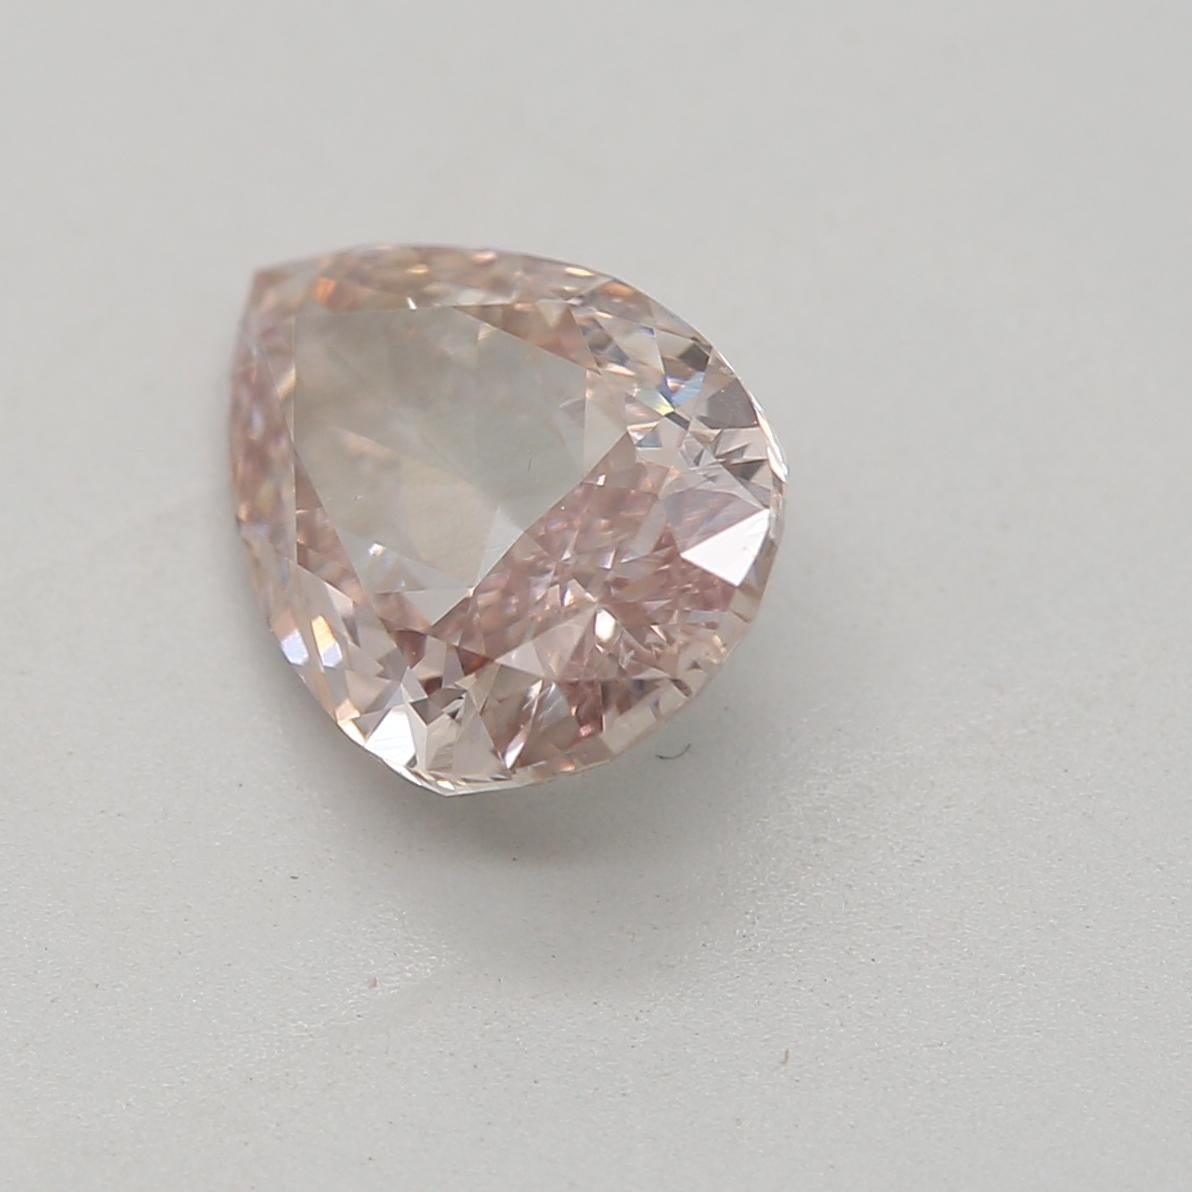 Pear Cut 1.01 Carat Fancy Brown Pink Pear cut diamond SI1 Clarity GIA Certified For Sale